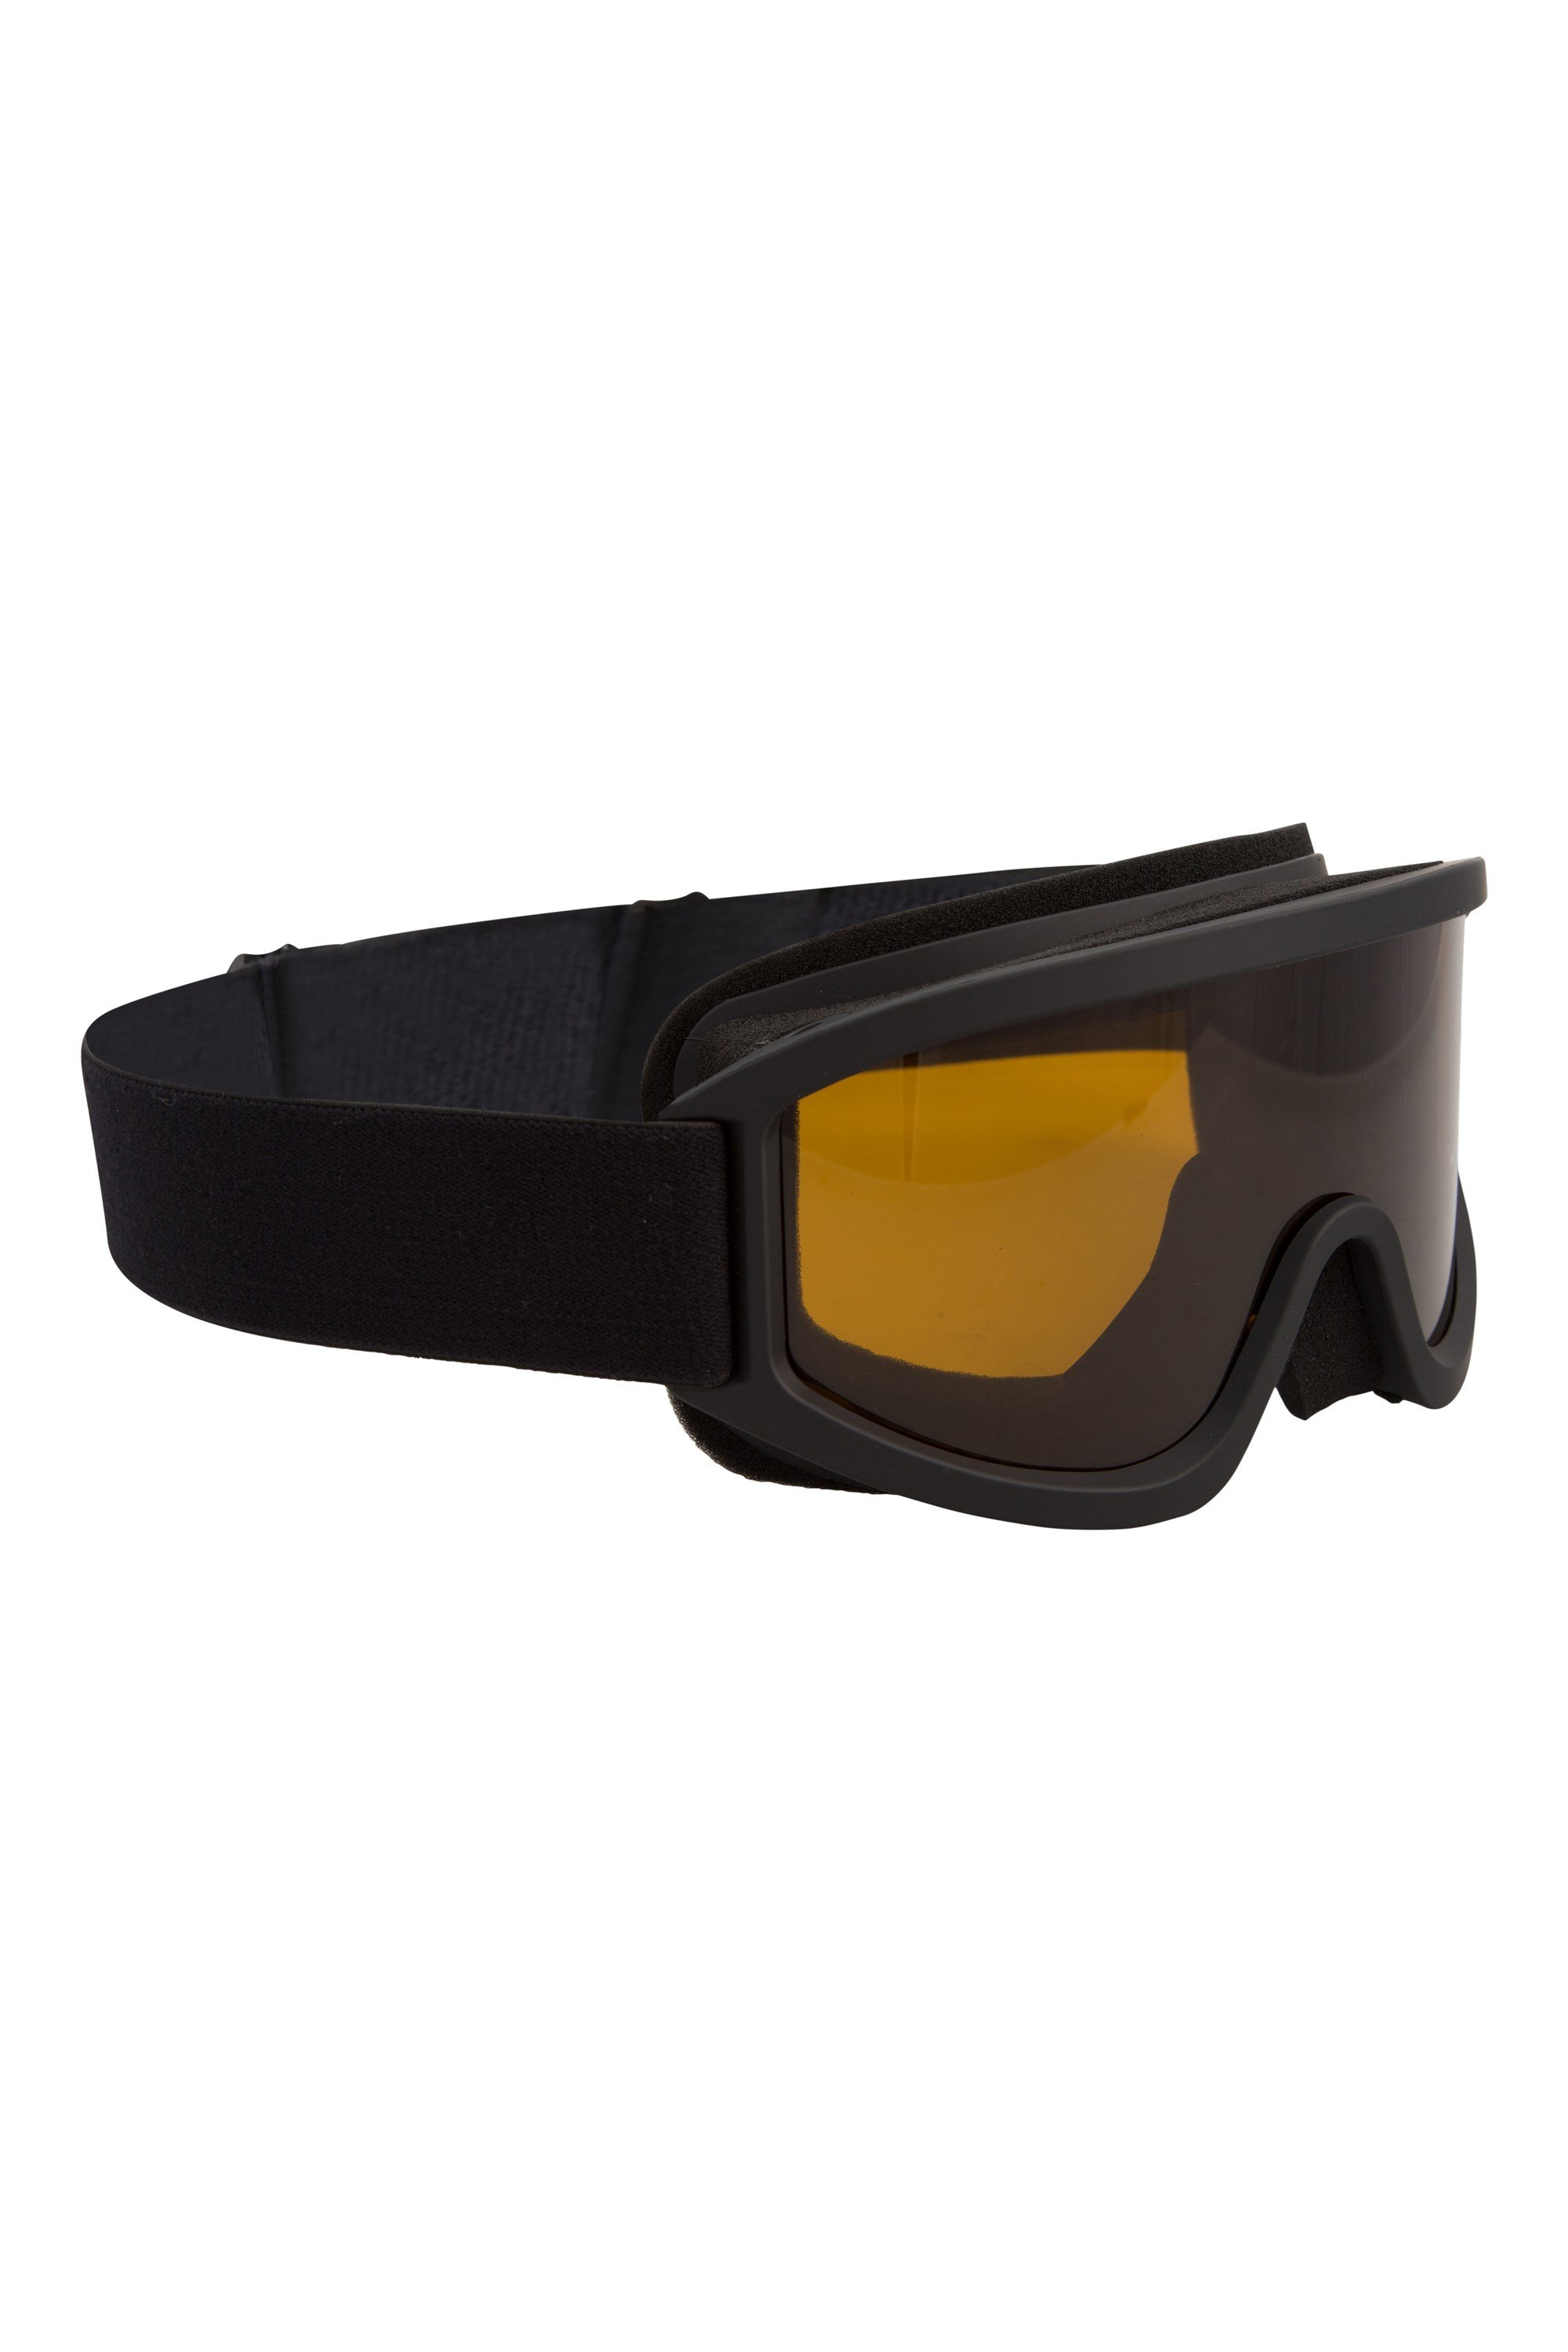 Mountain Warehouse Men's Ski Goggle II UV400 Anti-Fog Lens 